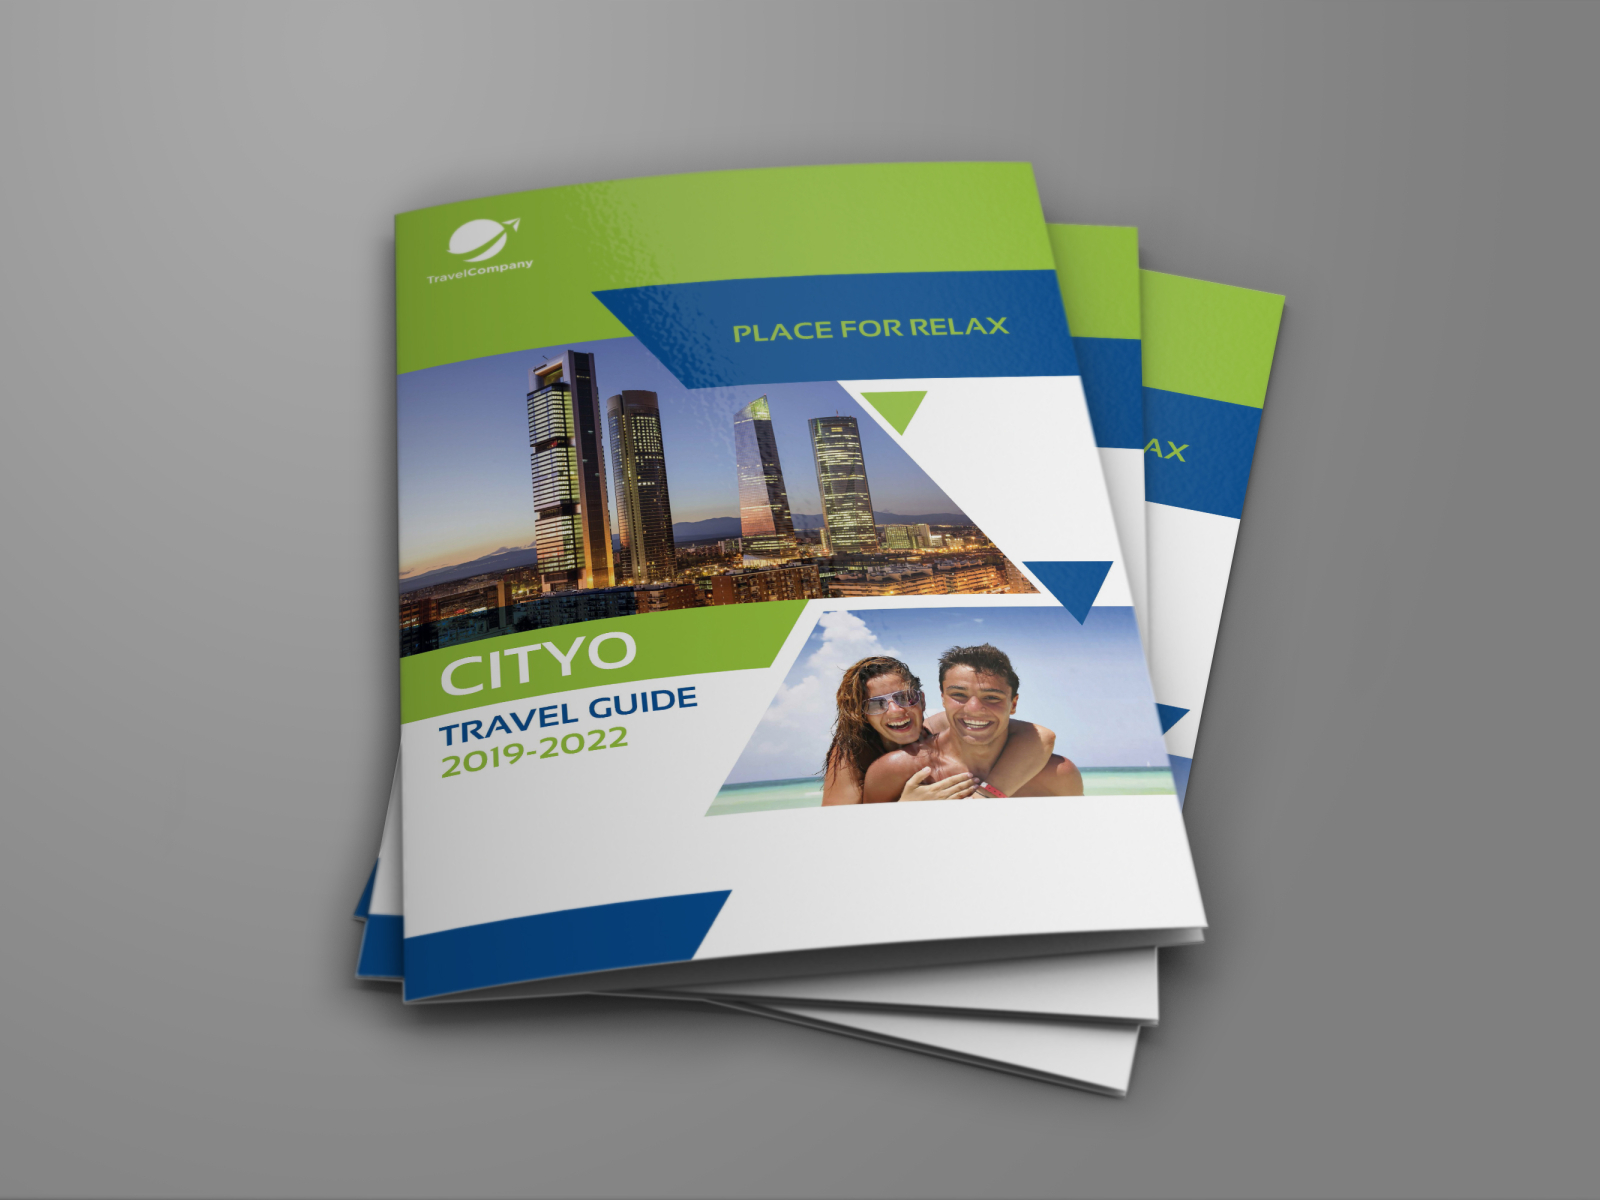 Travel Guide Bi Fold Brochure Template by OWPictures on Dribbble With Travel Guide Brochure Template